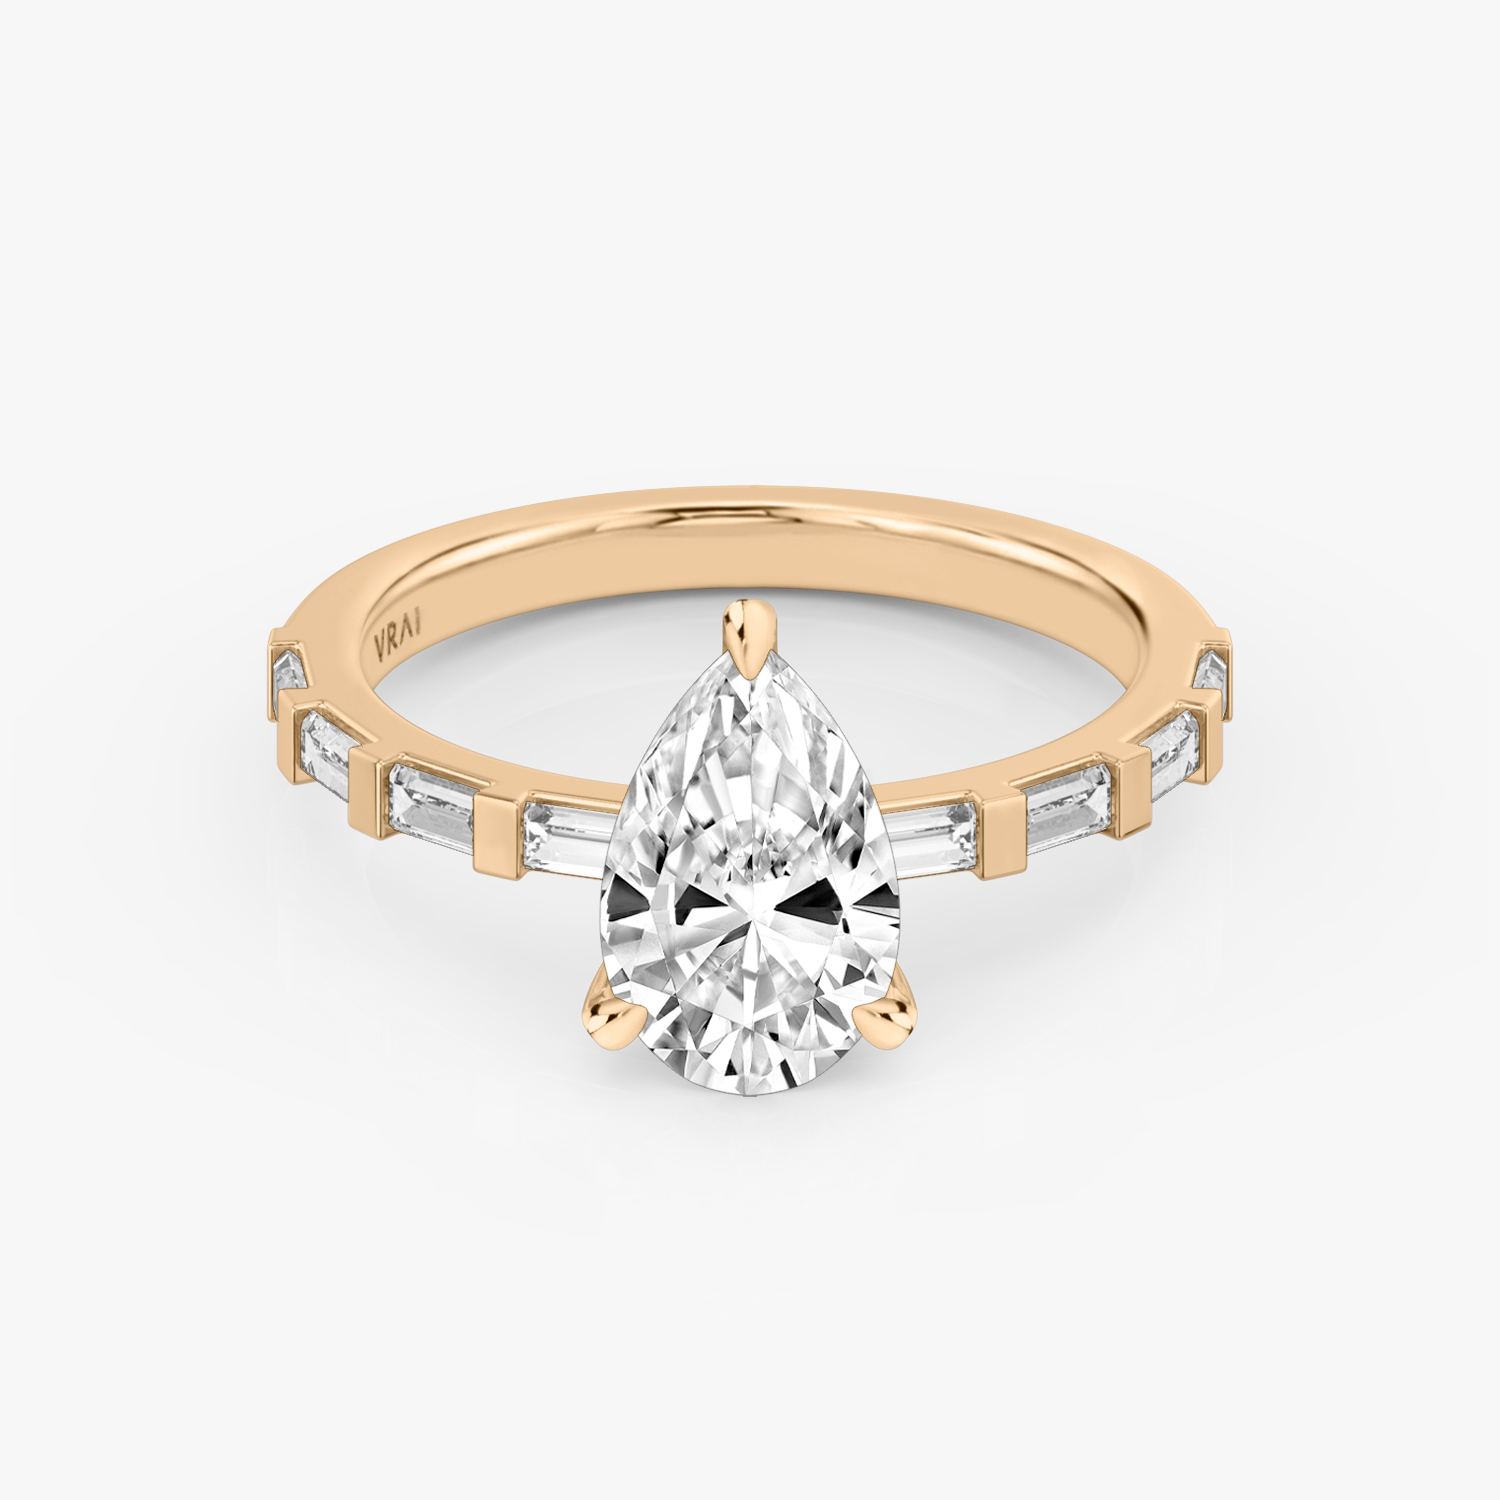 Baguette Cut Diamond Rings | The Diamond Store